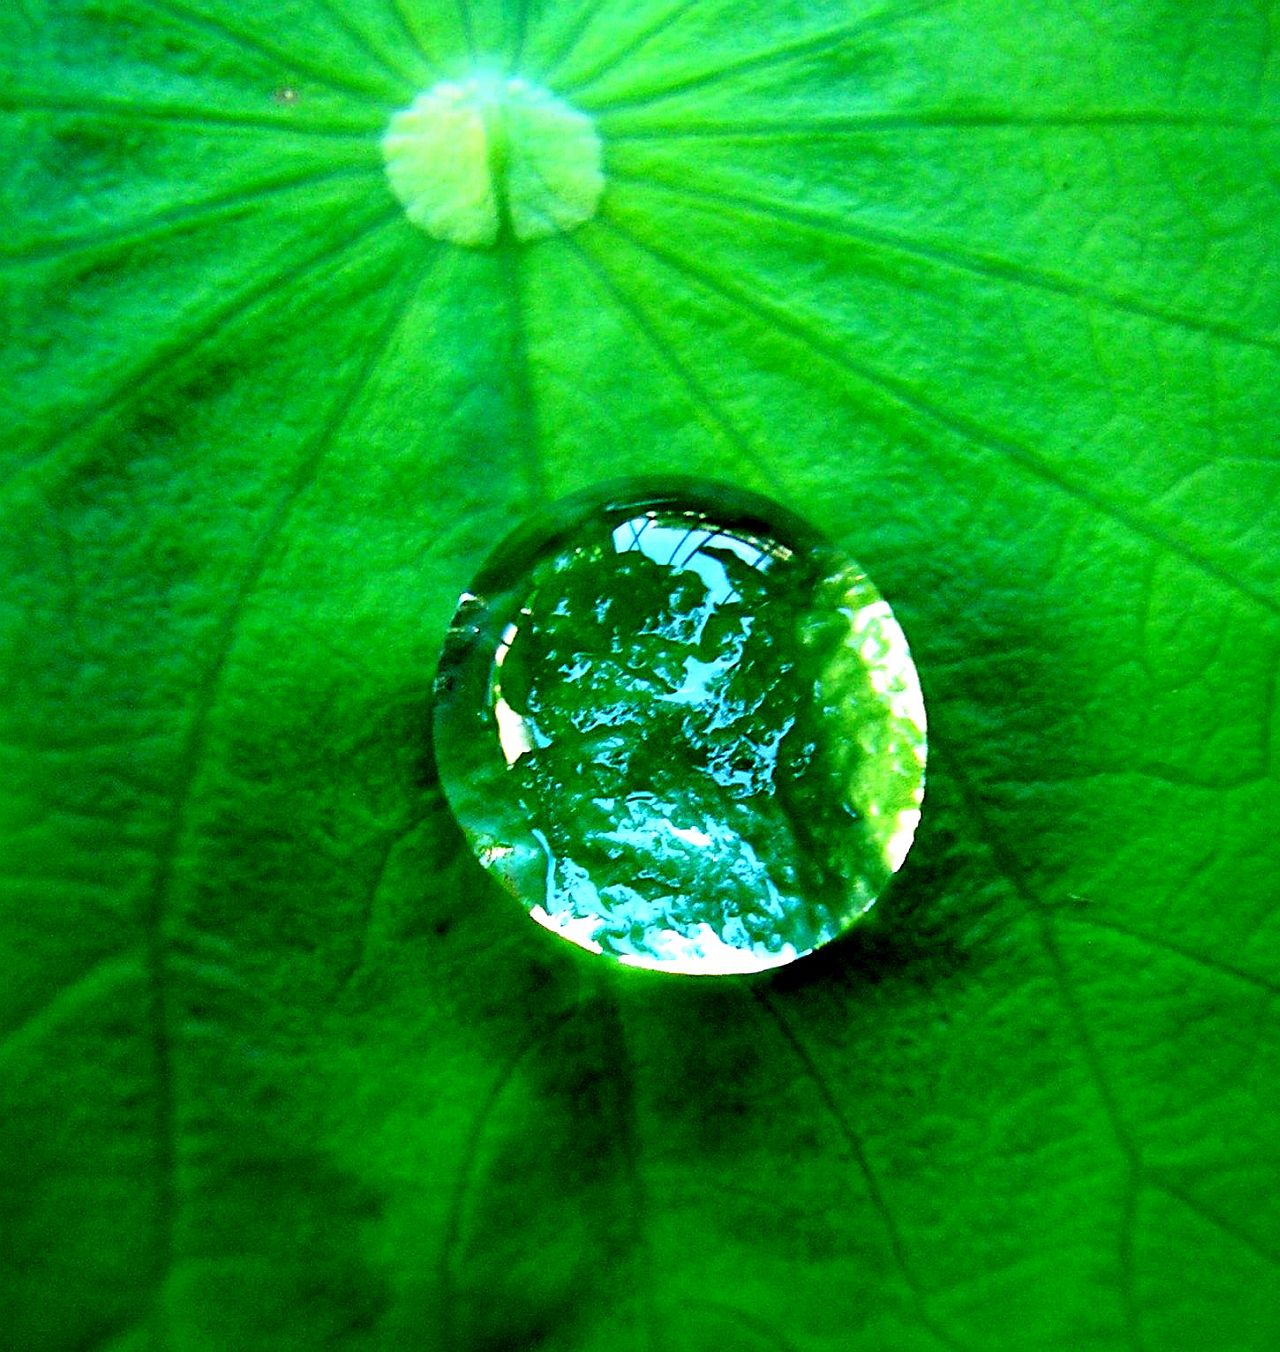 File:Water drop on a leaf.jpg - Wikimedia Commons